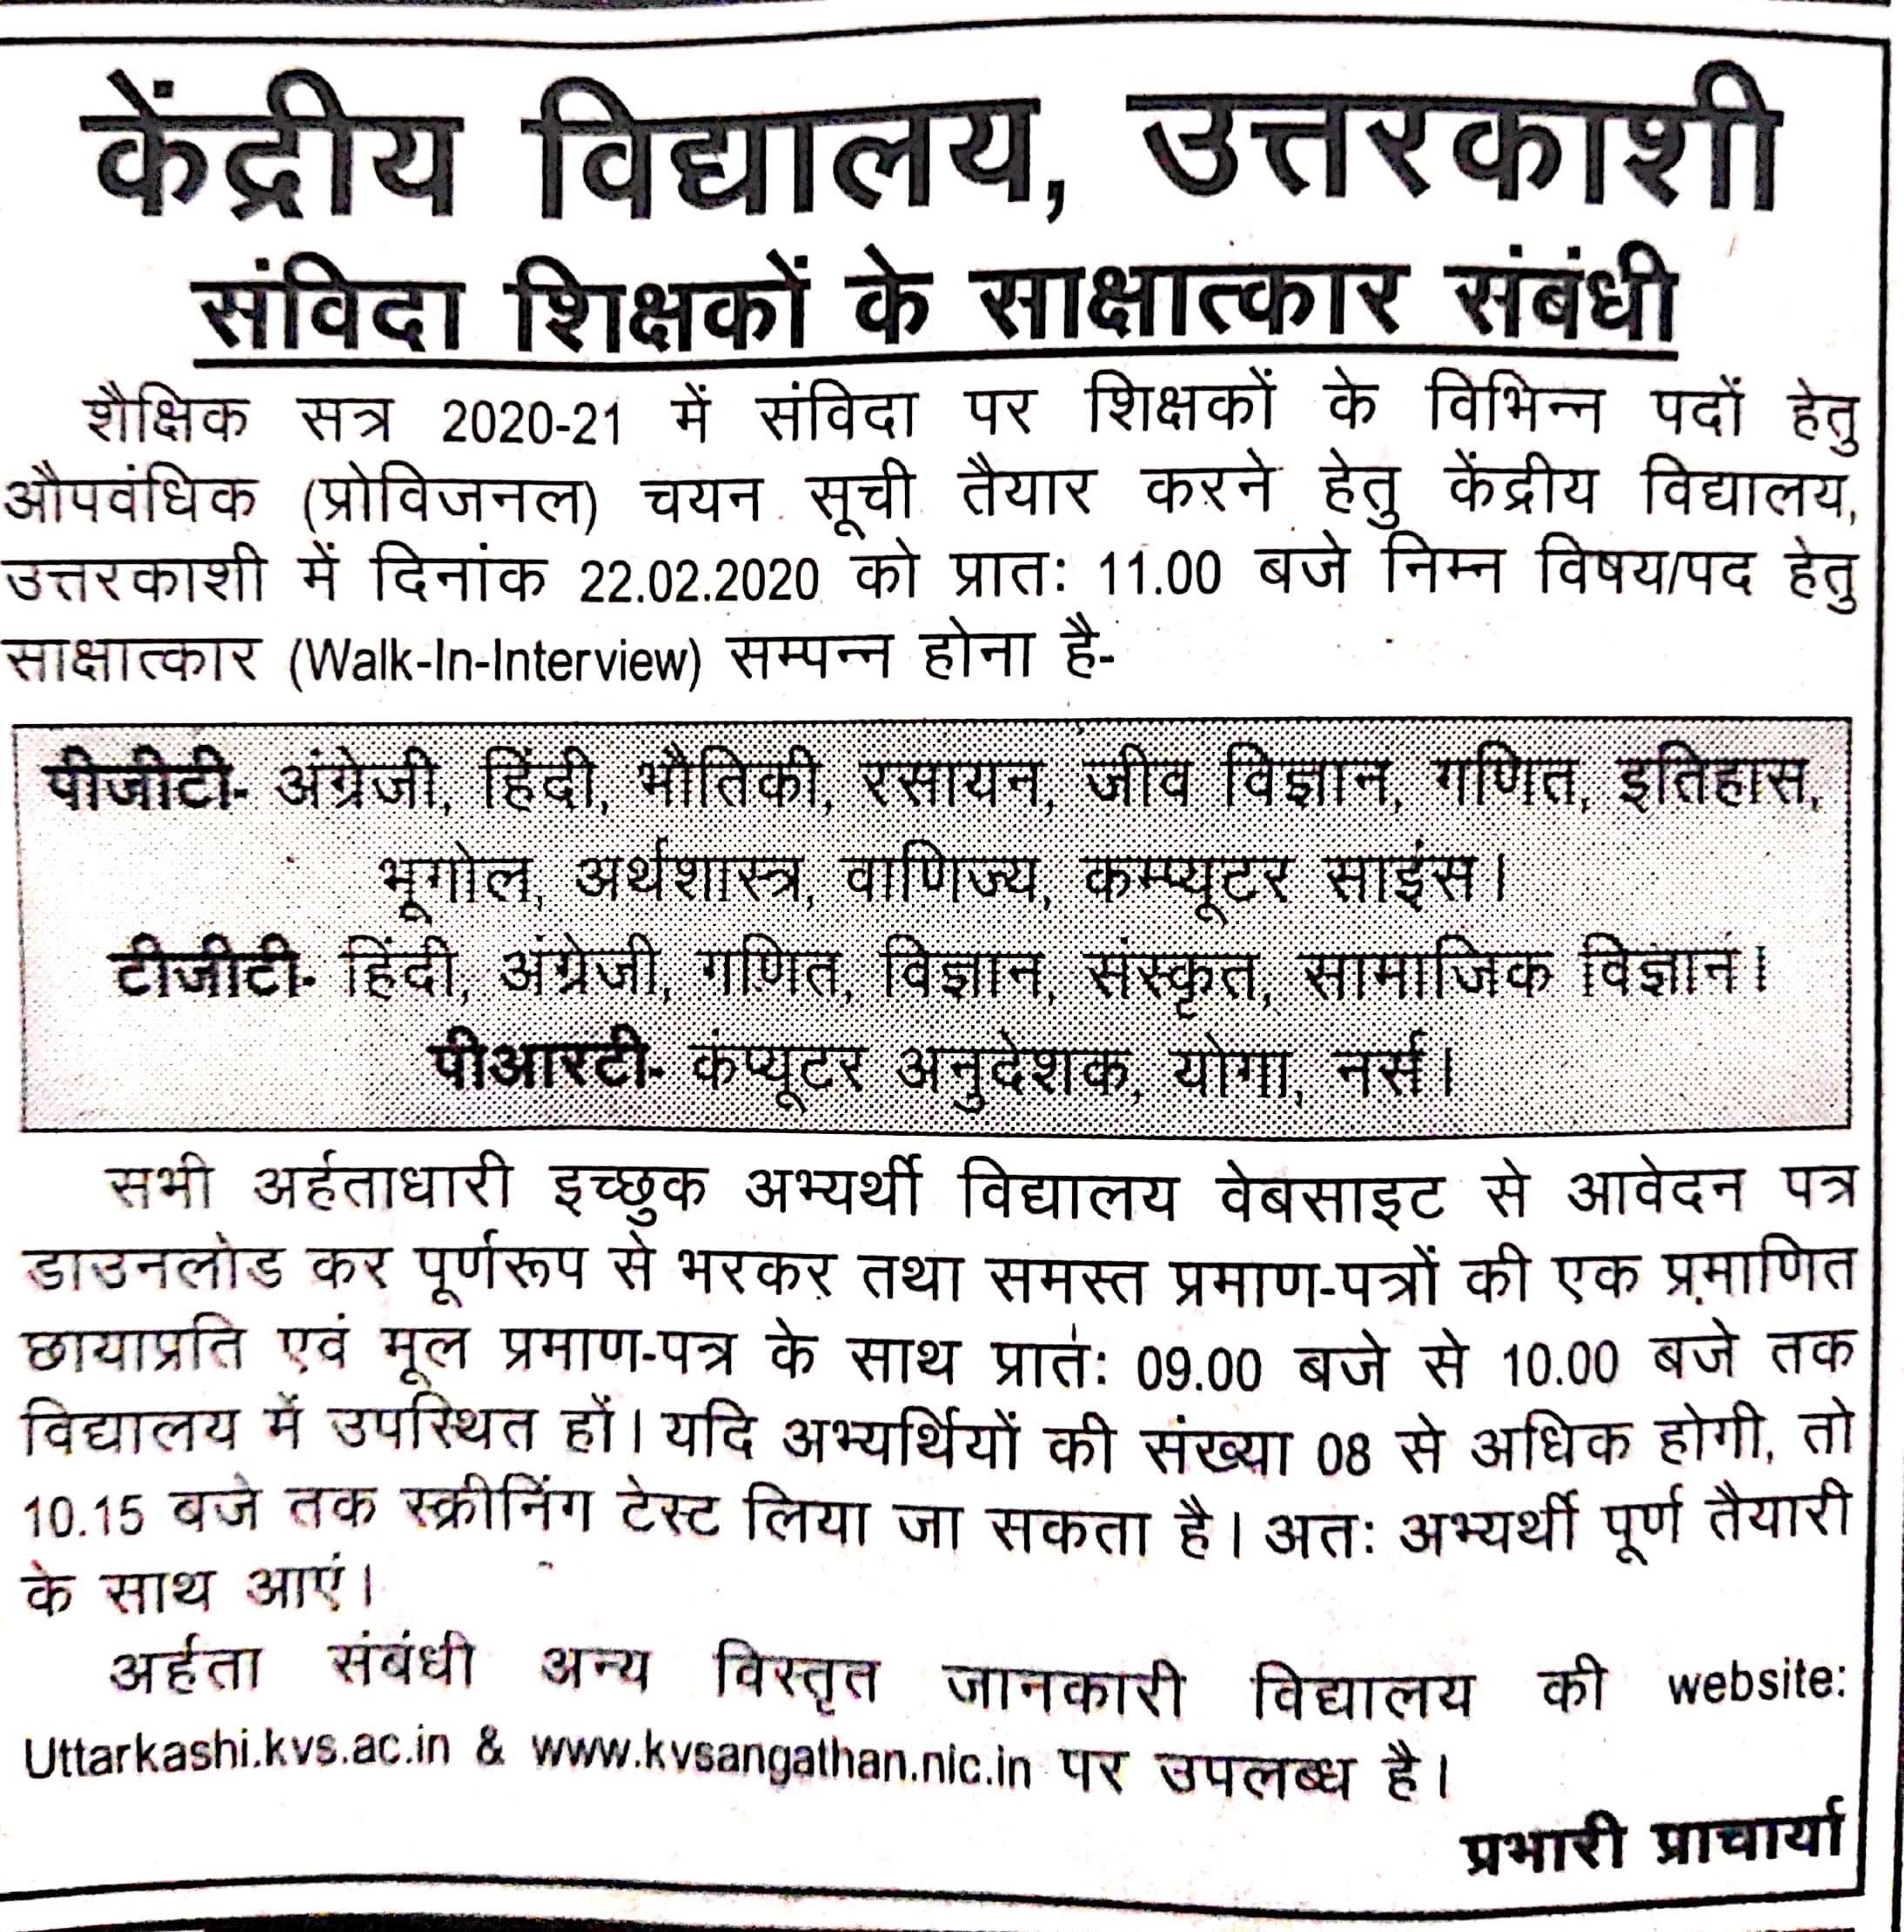 Teaching & Non-Teaching Staff Recruitment in KV Uttarkashi